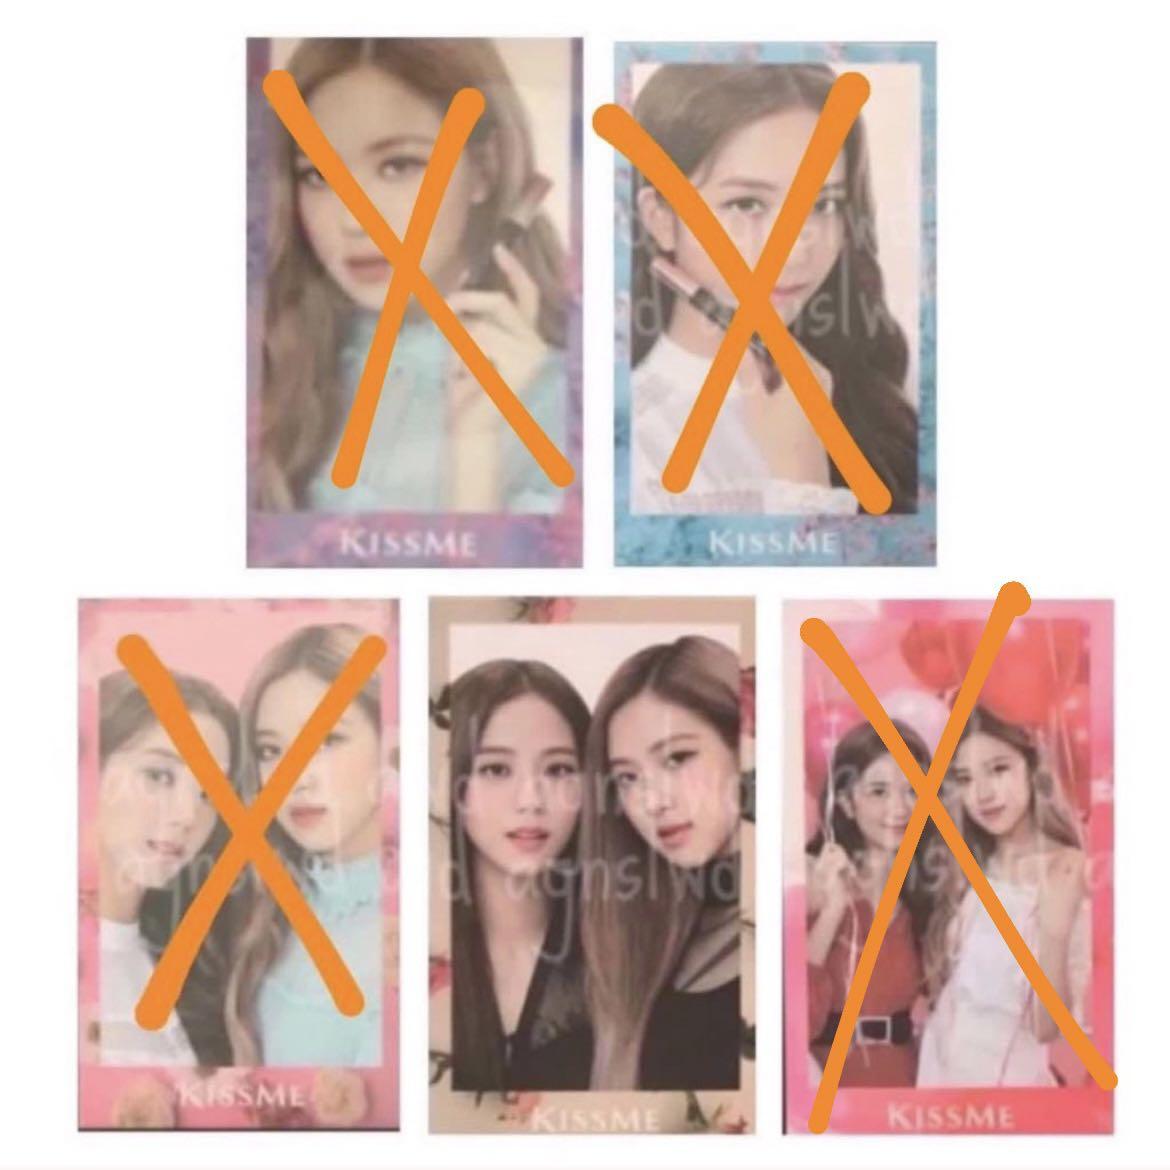 WTB/LF] Blackpink Jisoo & Rosé (Chaesoo) x Kissme Photocards